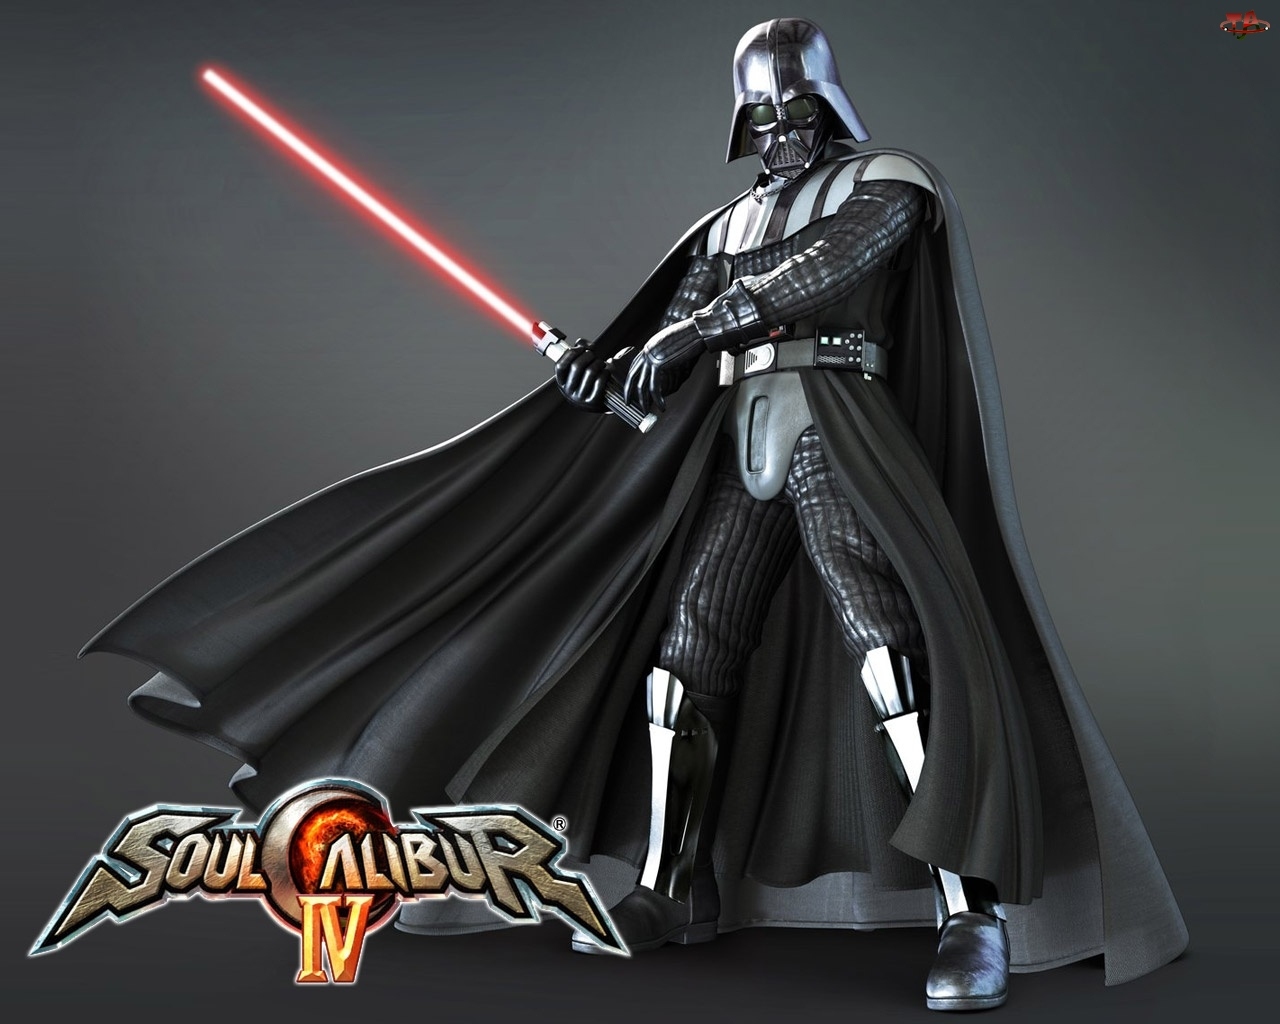 Lord Vader, Soul Calibur IV